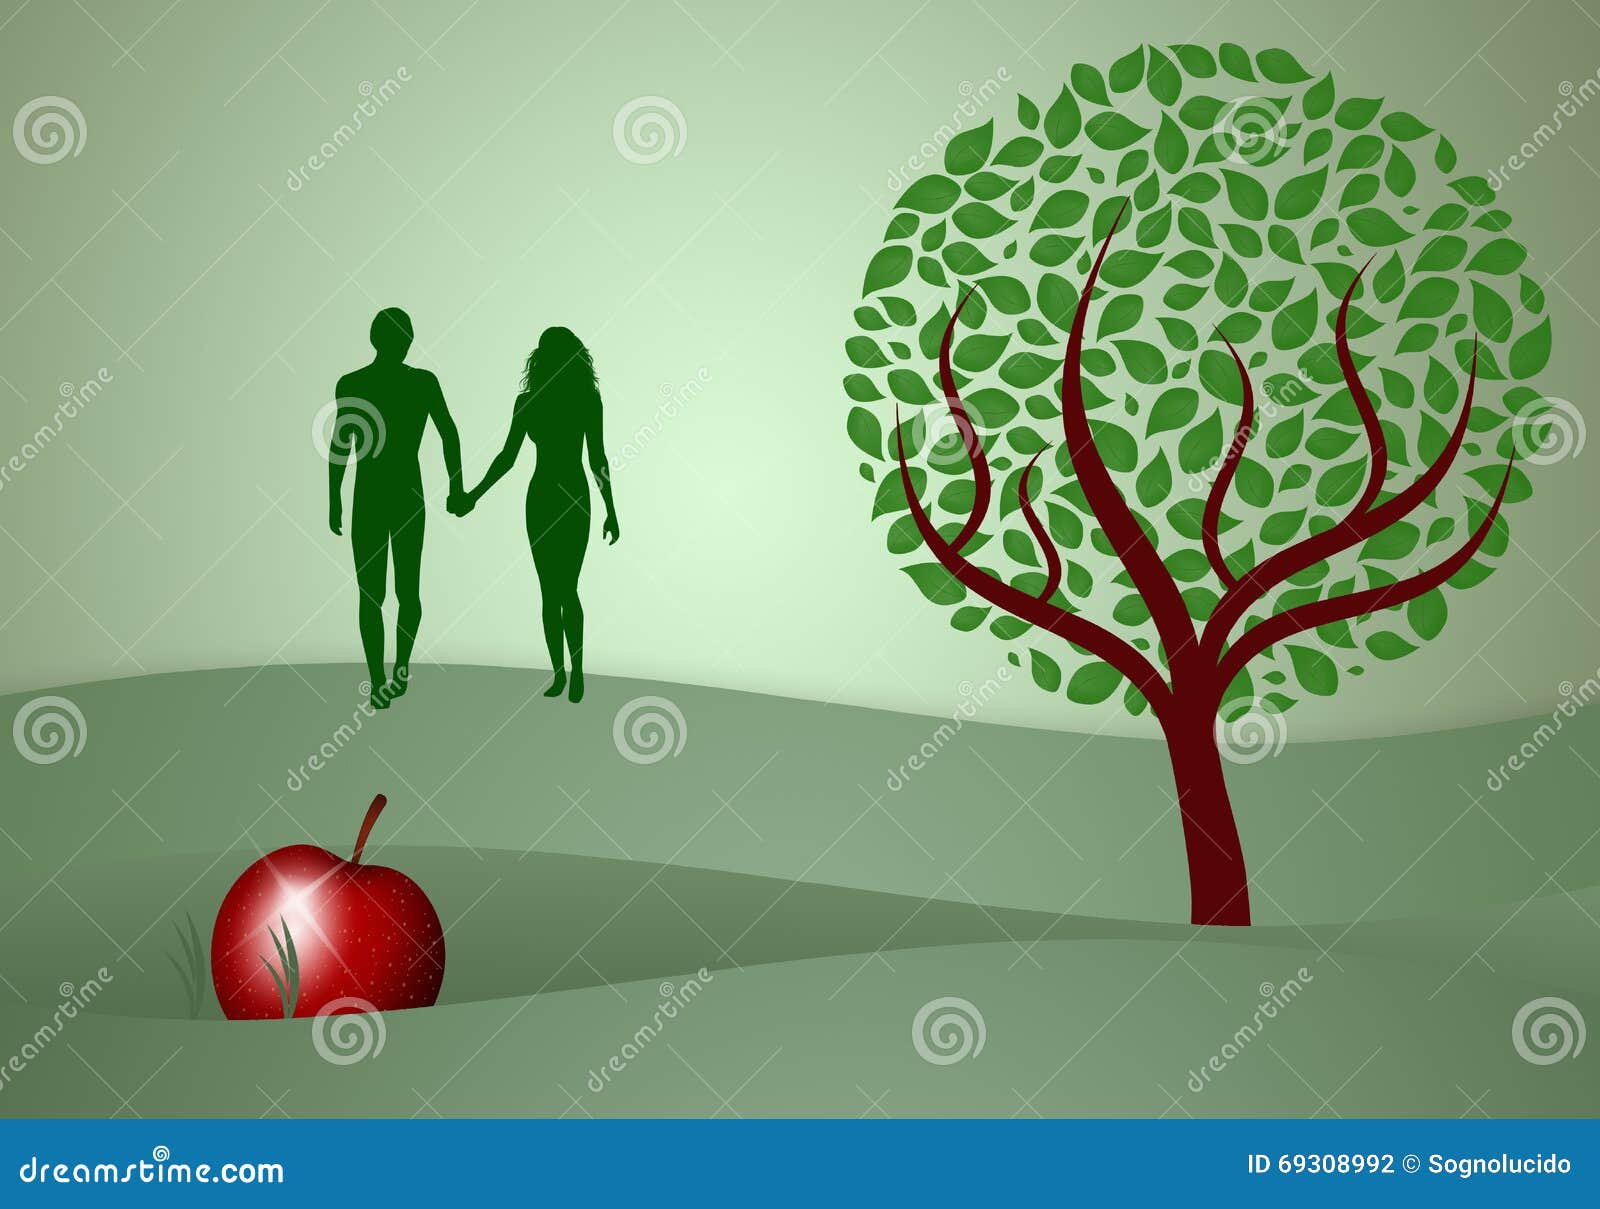 Adam And Eve Silhouette Stock Illustration Illustration Of Genesis